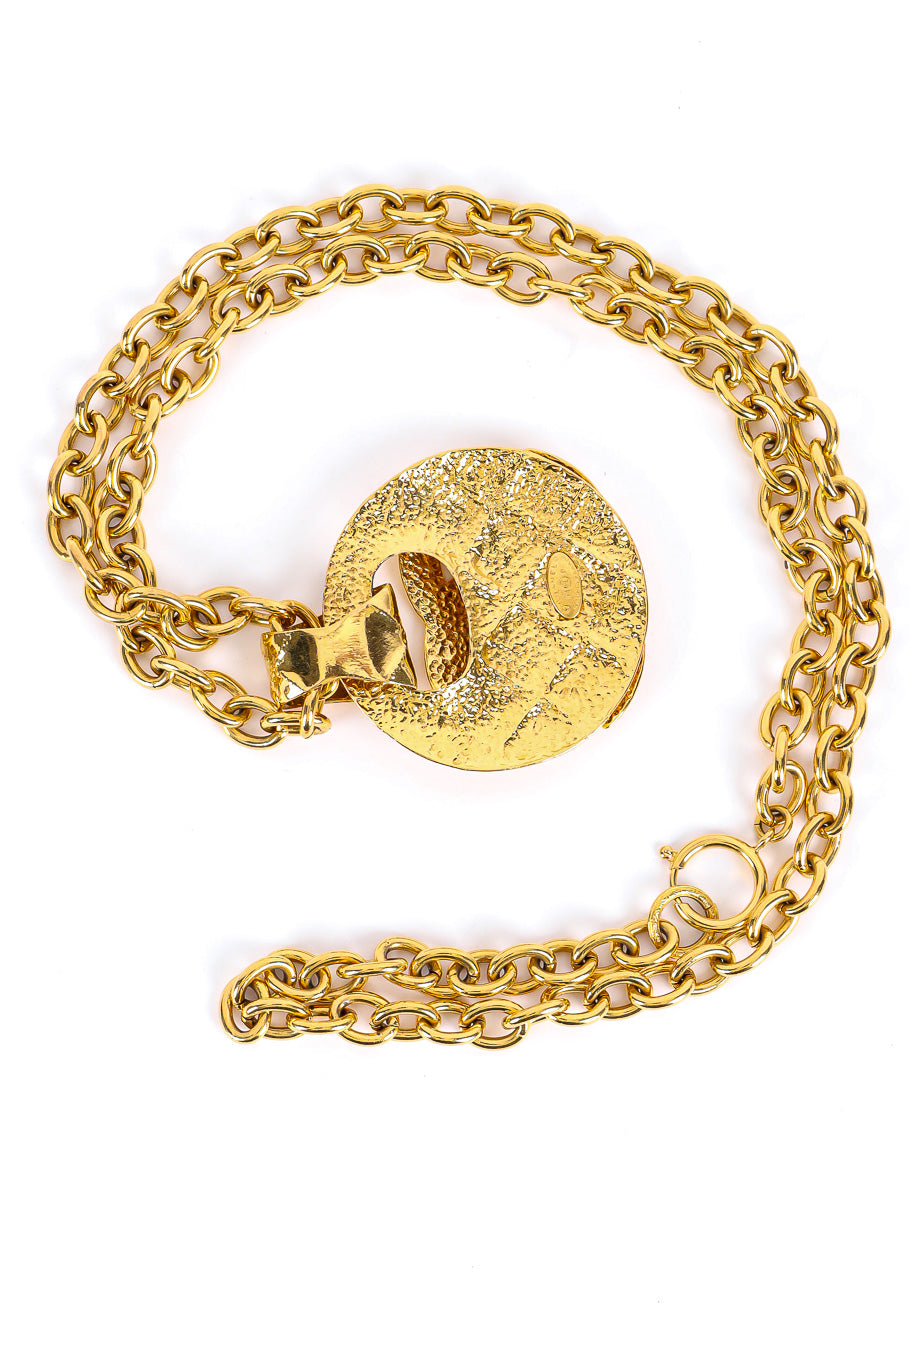 Vintage Chanel Large Quilted CC Doorknocker Necklace back pendant @recessla